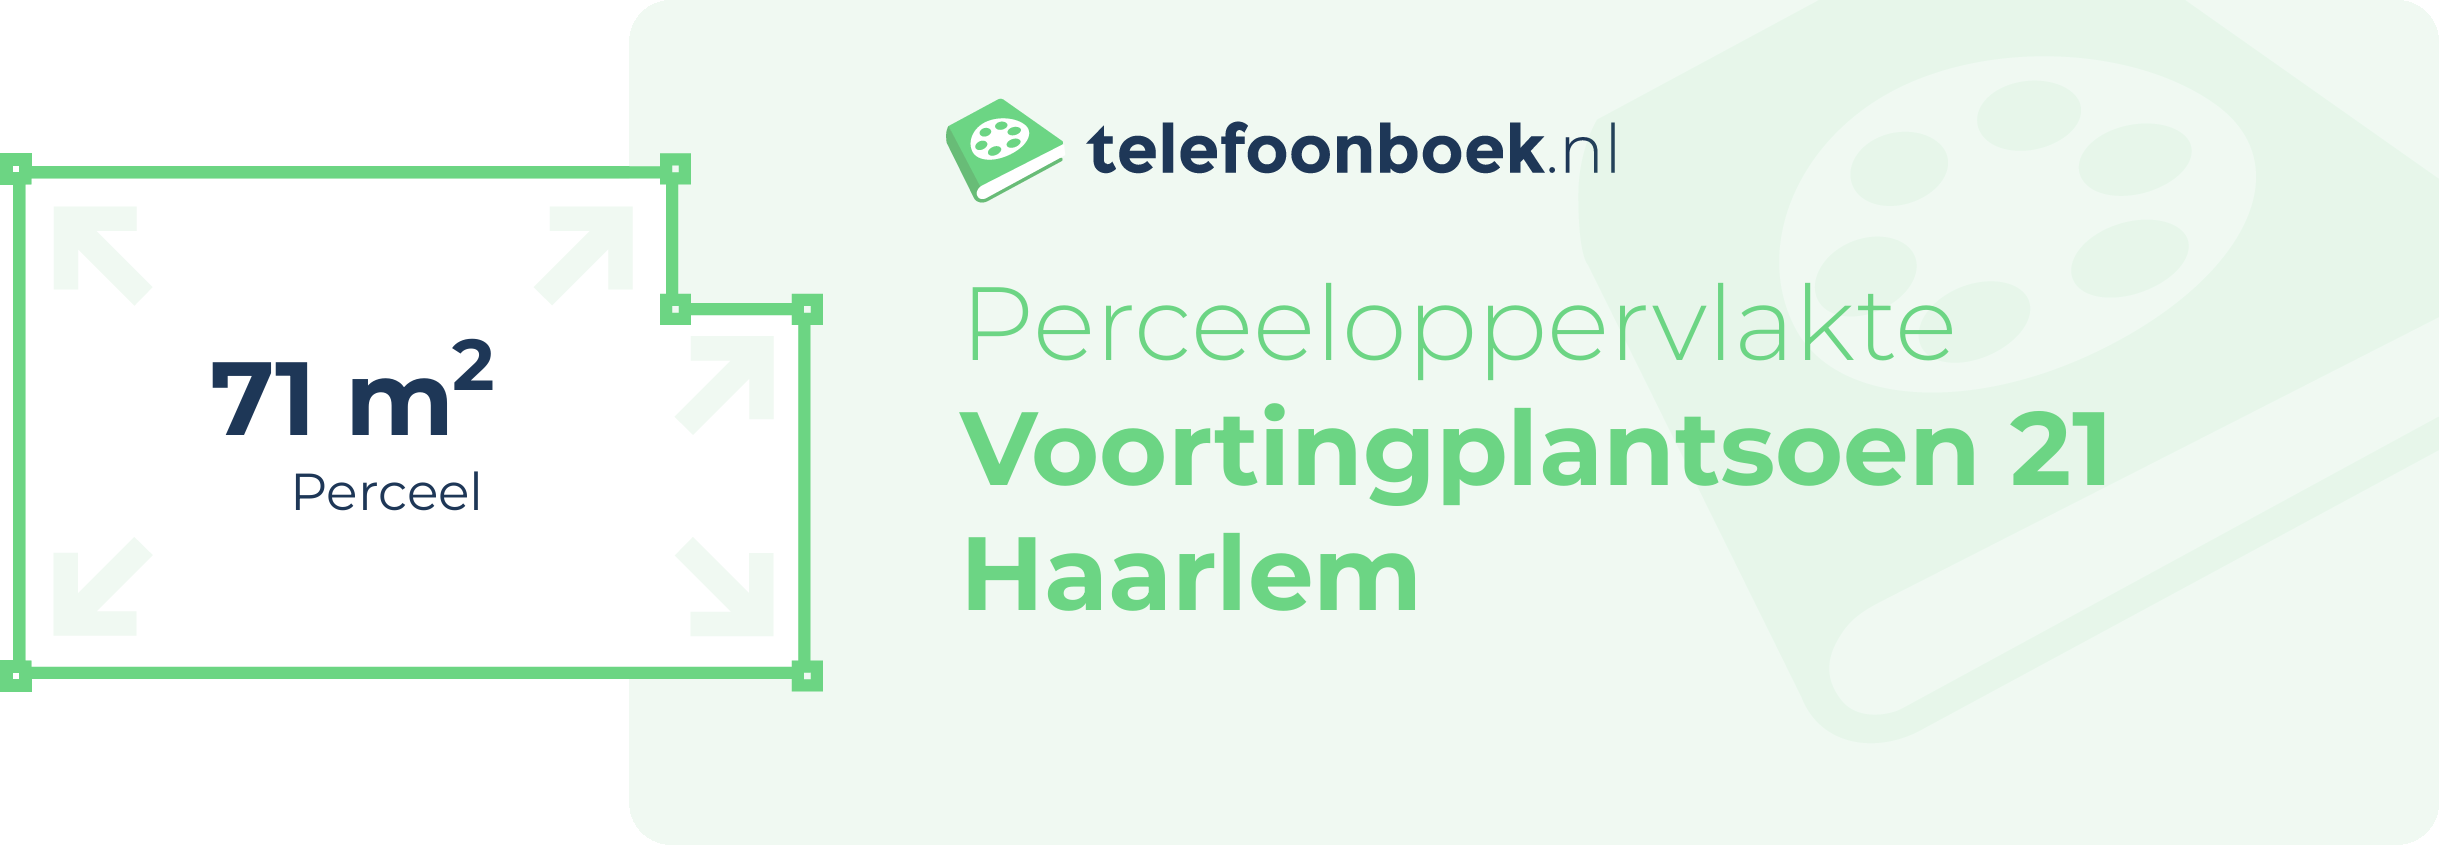 Perceeloppervlakte Voortingplantsoen 21 Haarlem